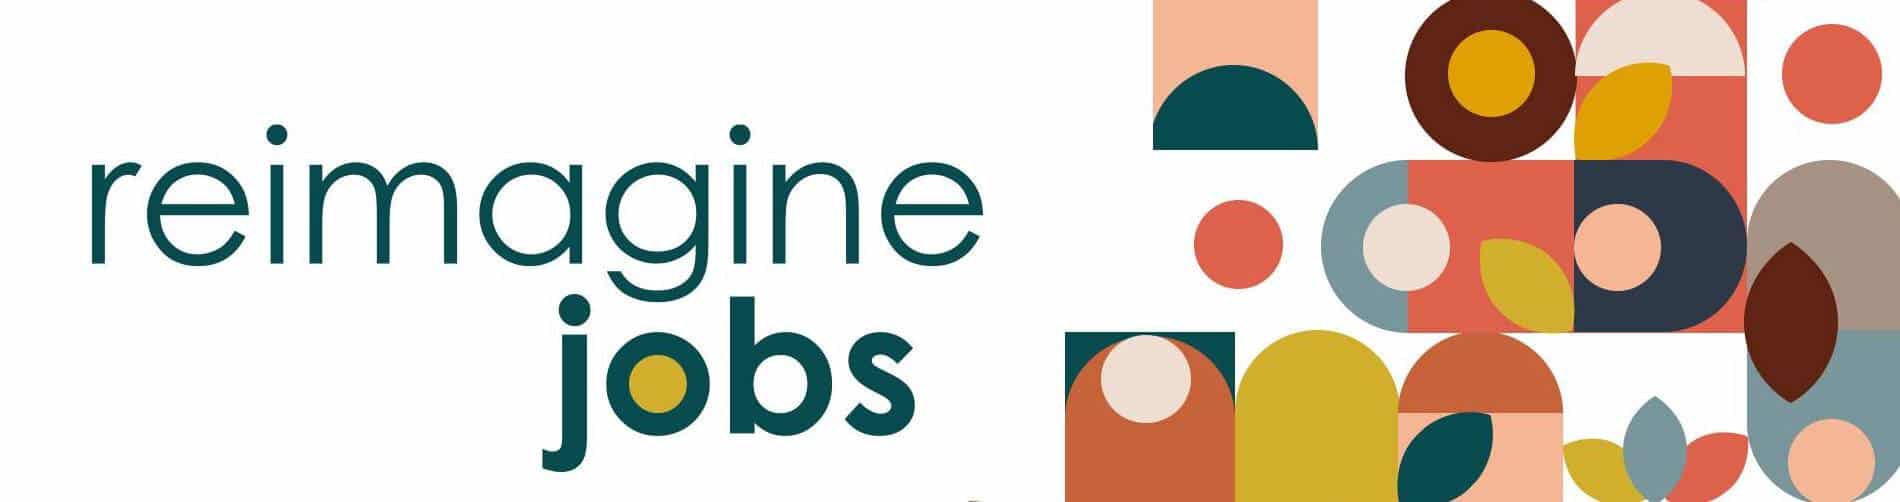 ReImagine Jobs Logo copy